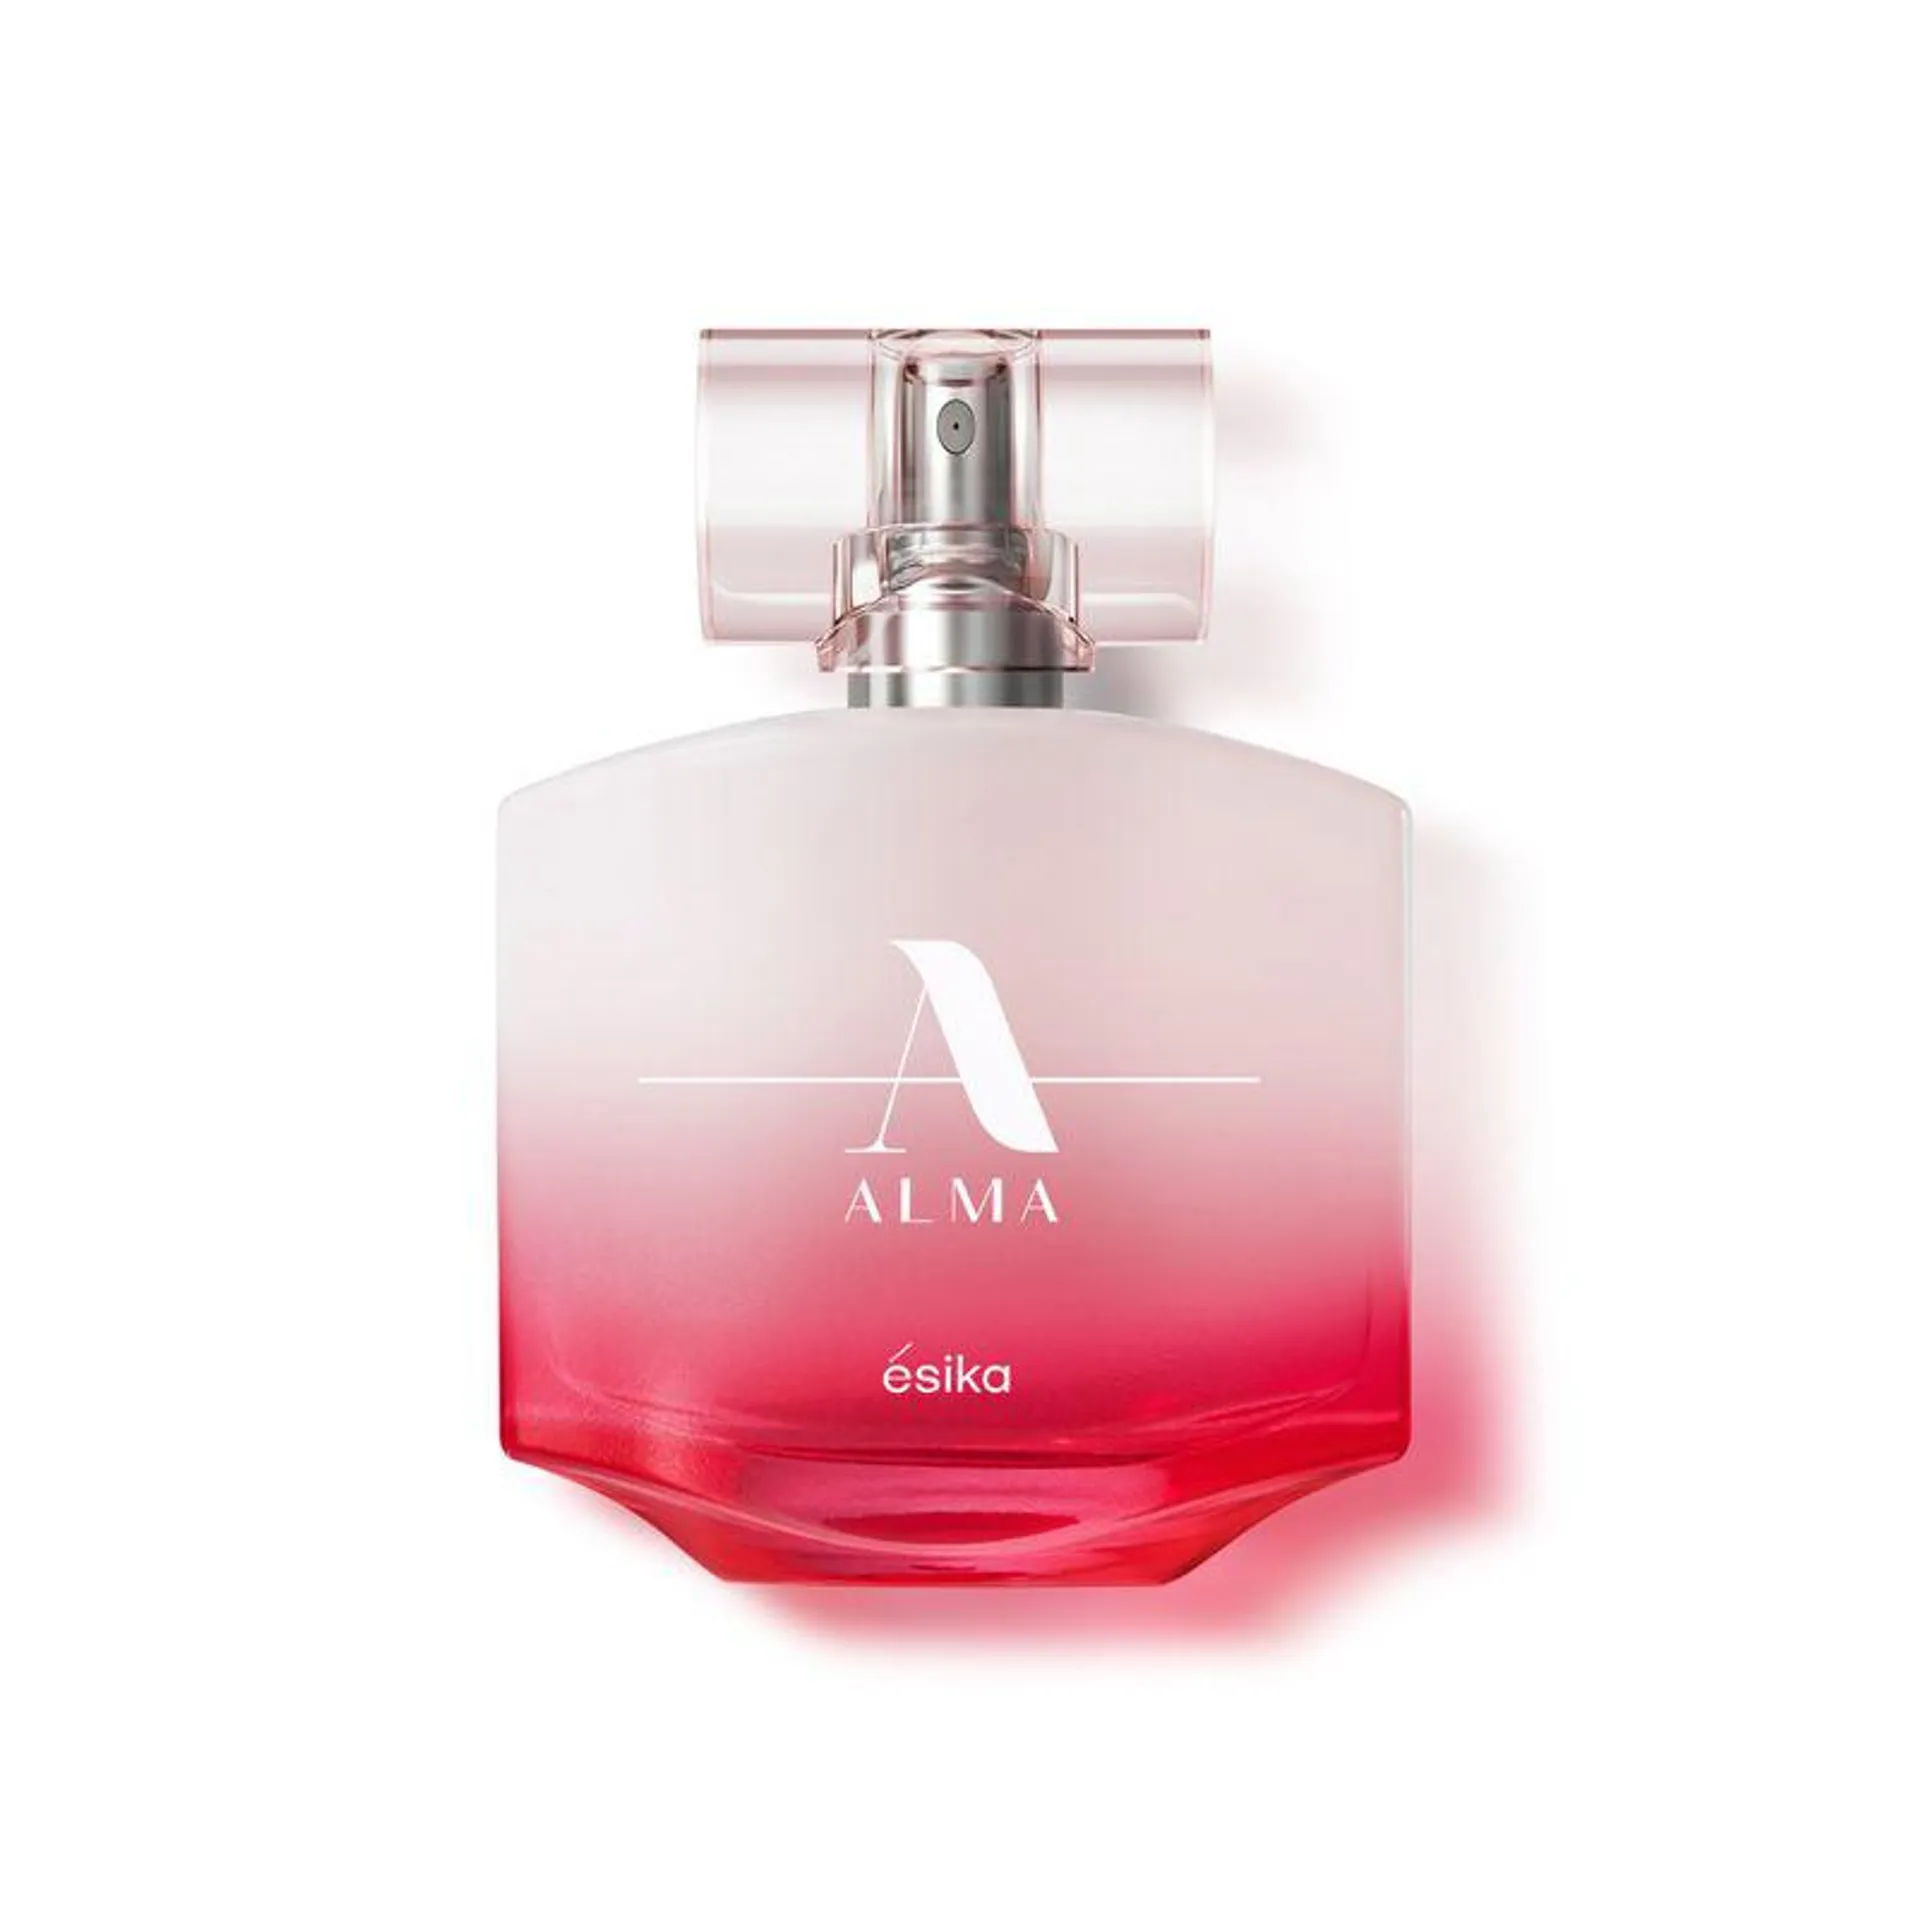 Alma Eau de Parfum, 50 ml